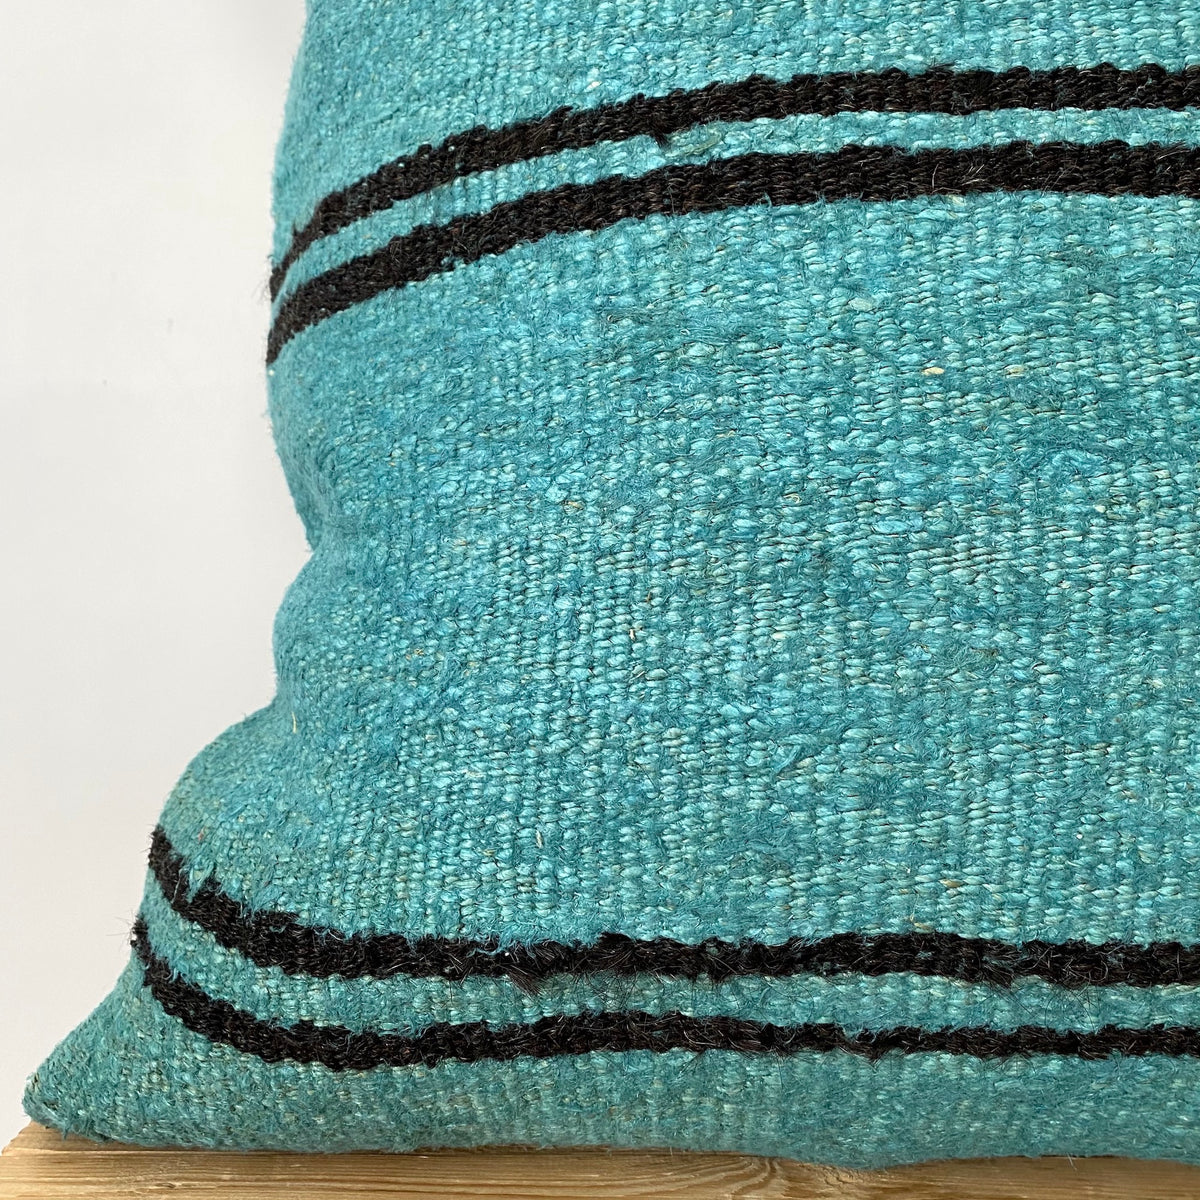 Giadana - Turquoise Hemp Pillow Cover - kudenrugs